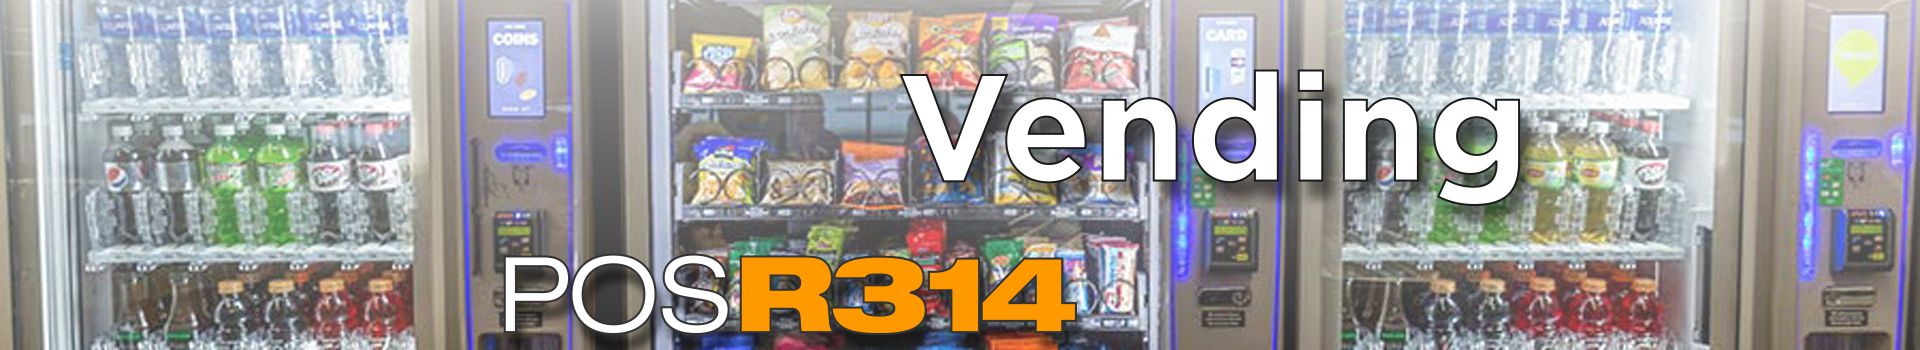 POS R314 - Vending